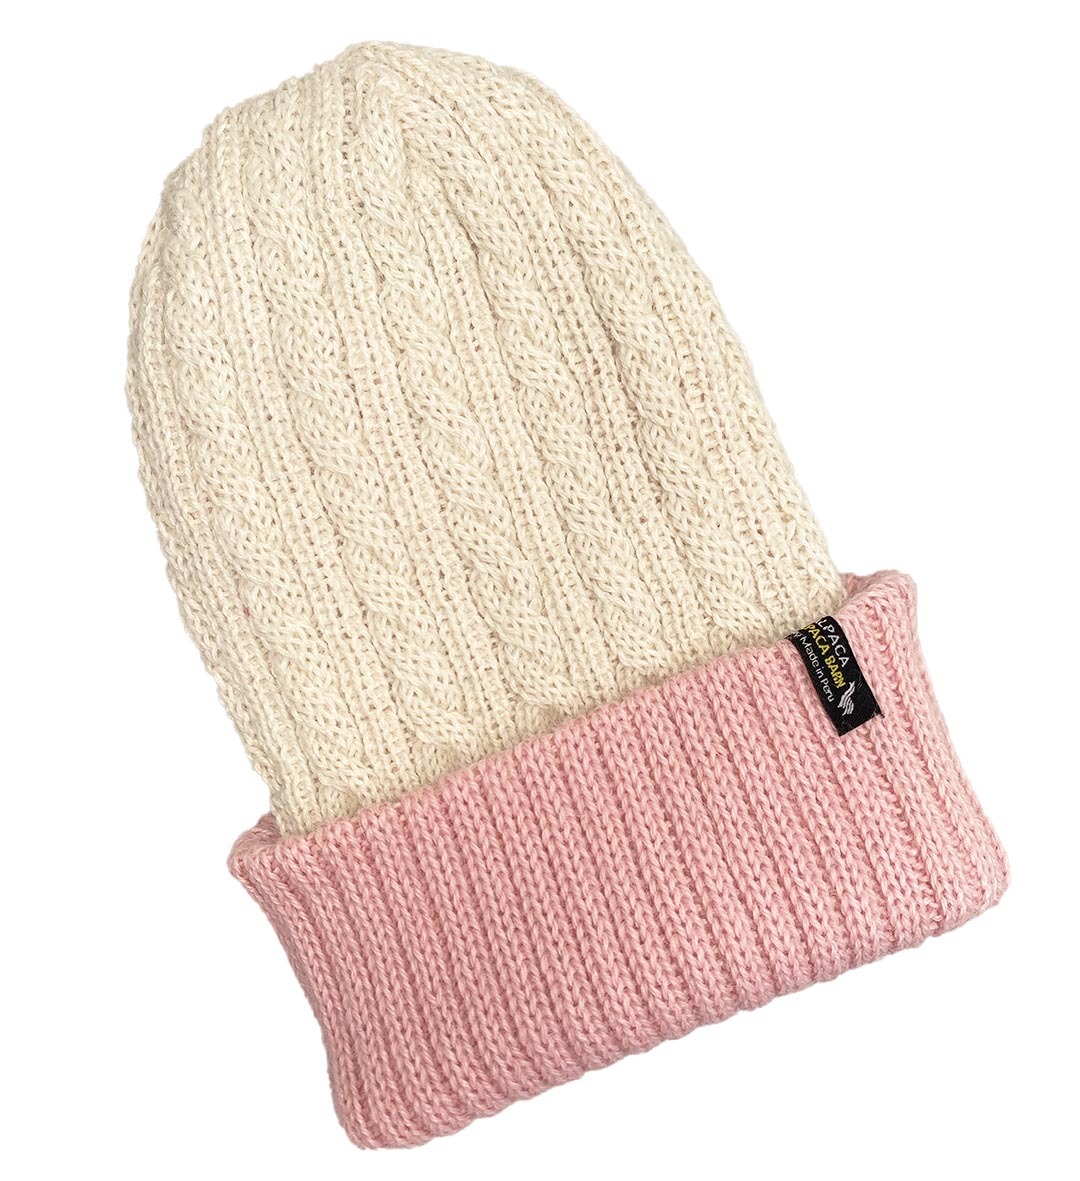 Reversible Hand Knit Alpaca Beanie - Pale Pink / White - 2